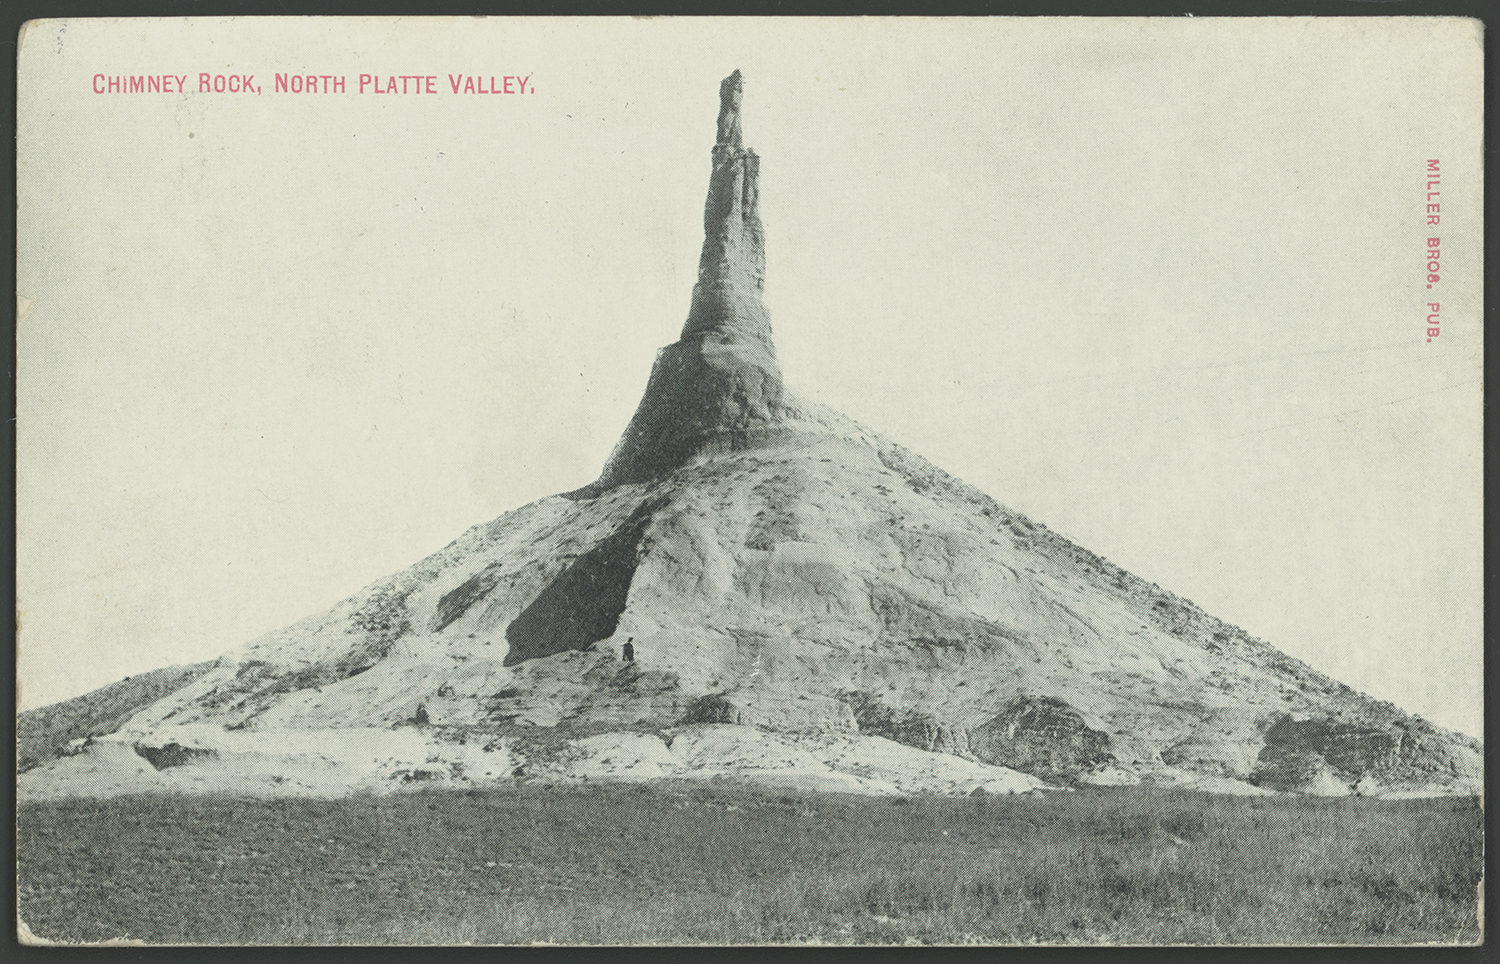 Chimney Rock, North Platte Valley, Miller Bros. Pub.